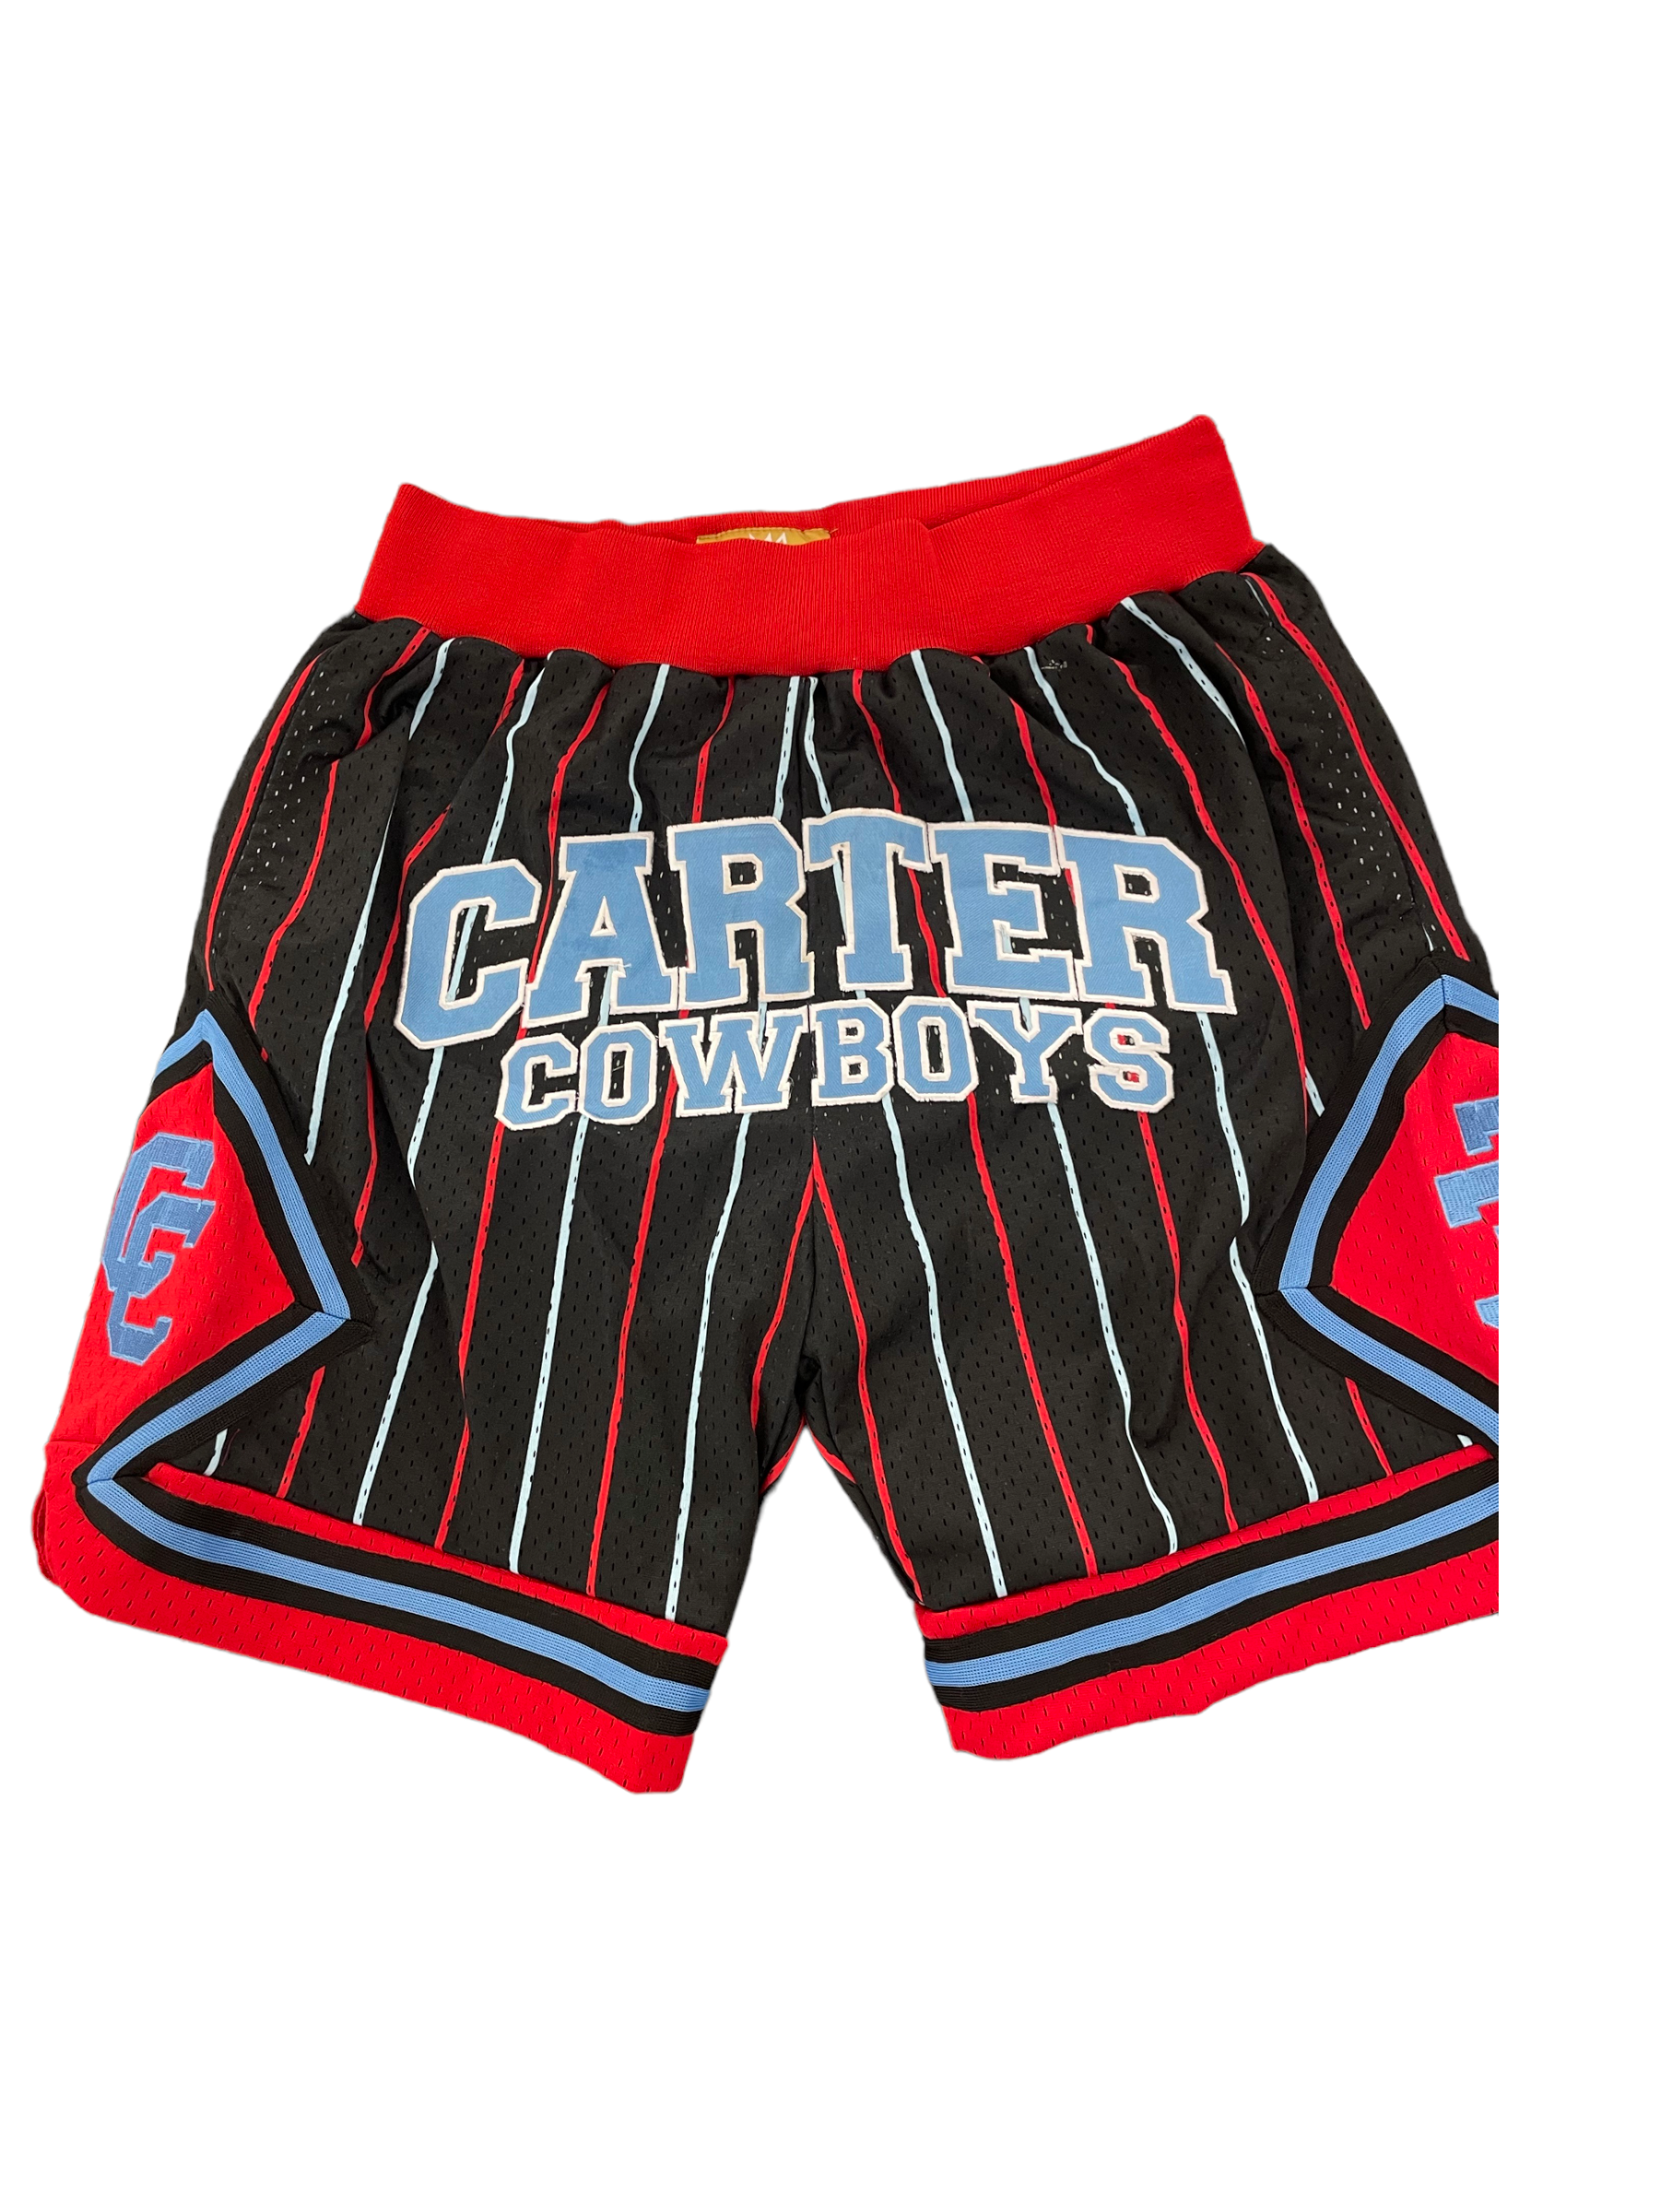 Dallas Carter Basketball Shorts BLACK / RED/COLUMBIA BLUE PINSTRIPES  2.0